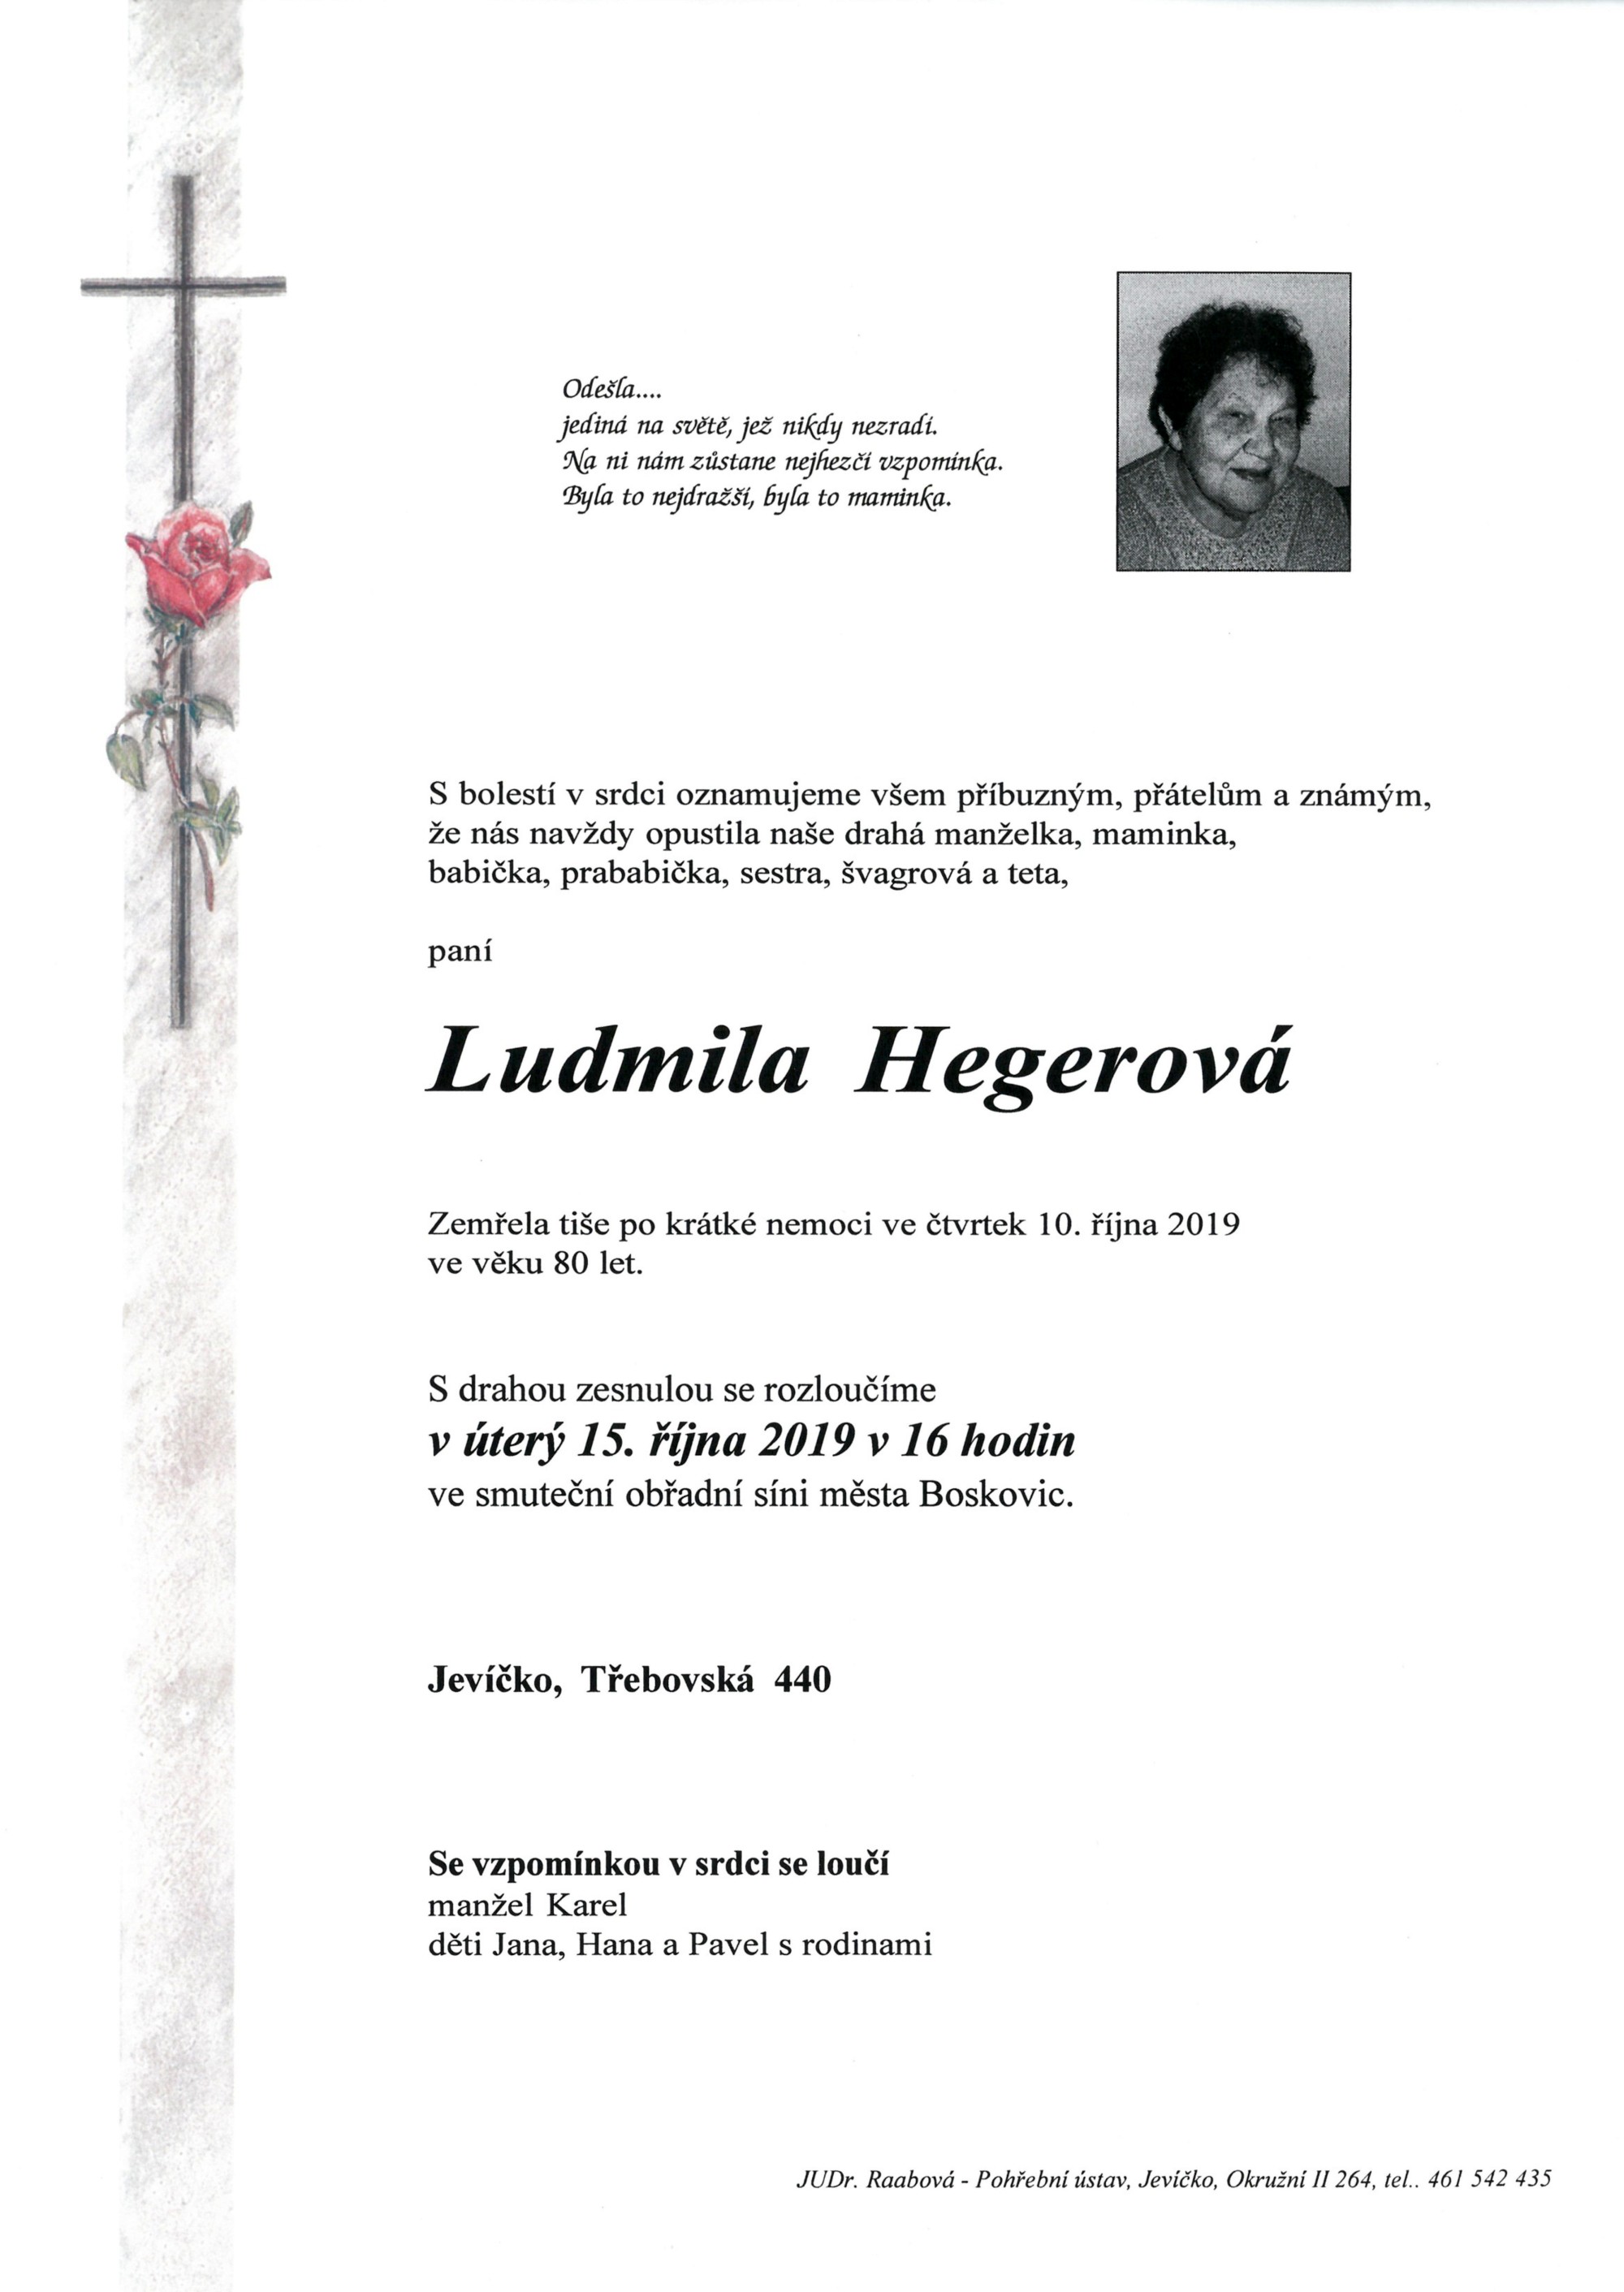 Ludmila Hegerová